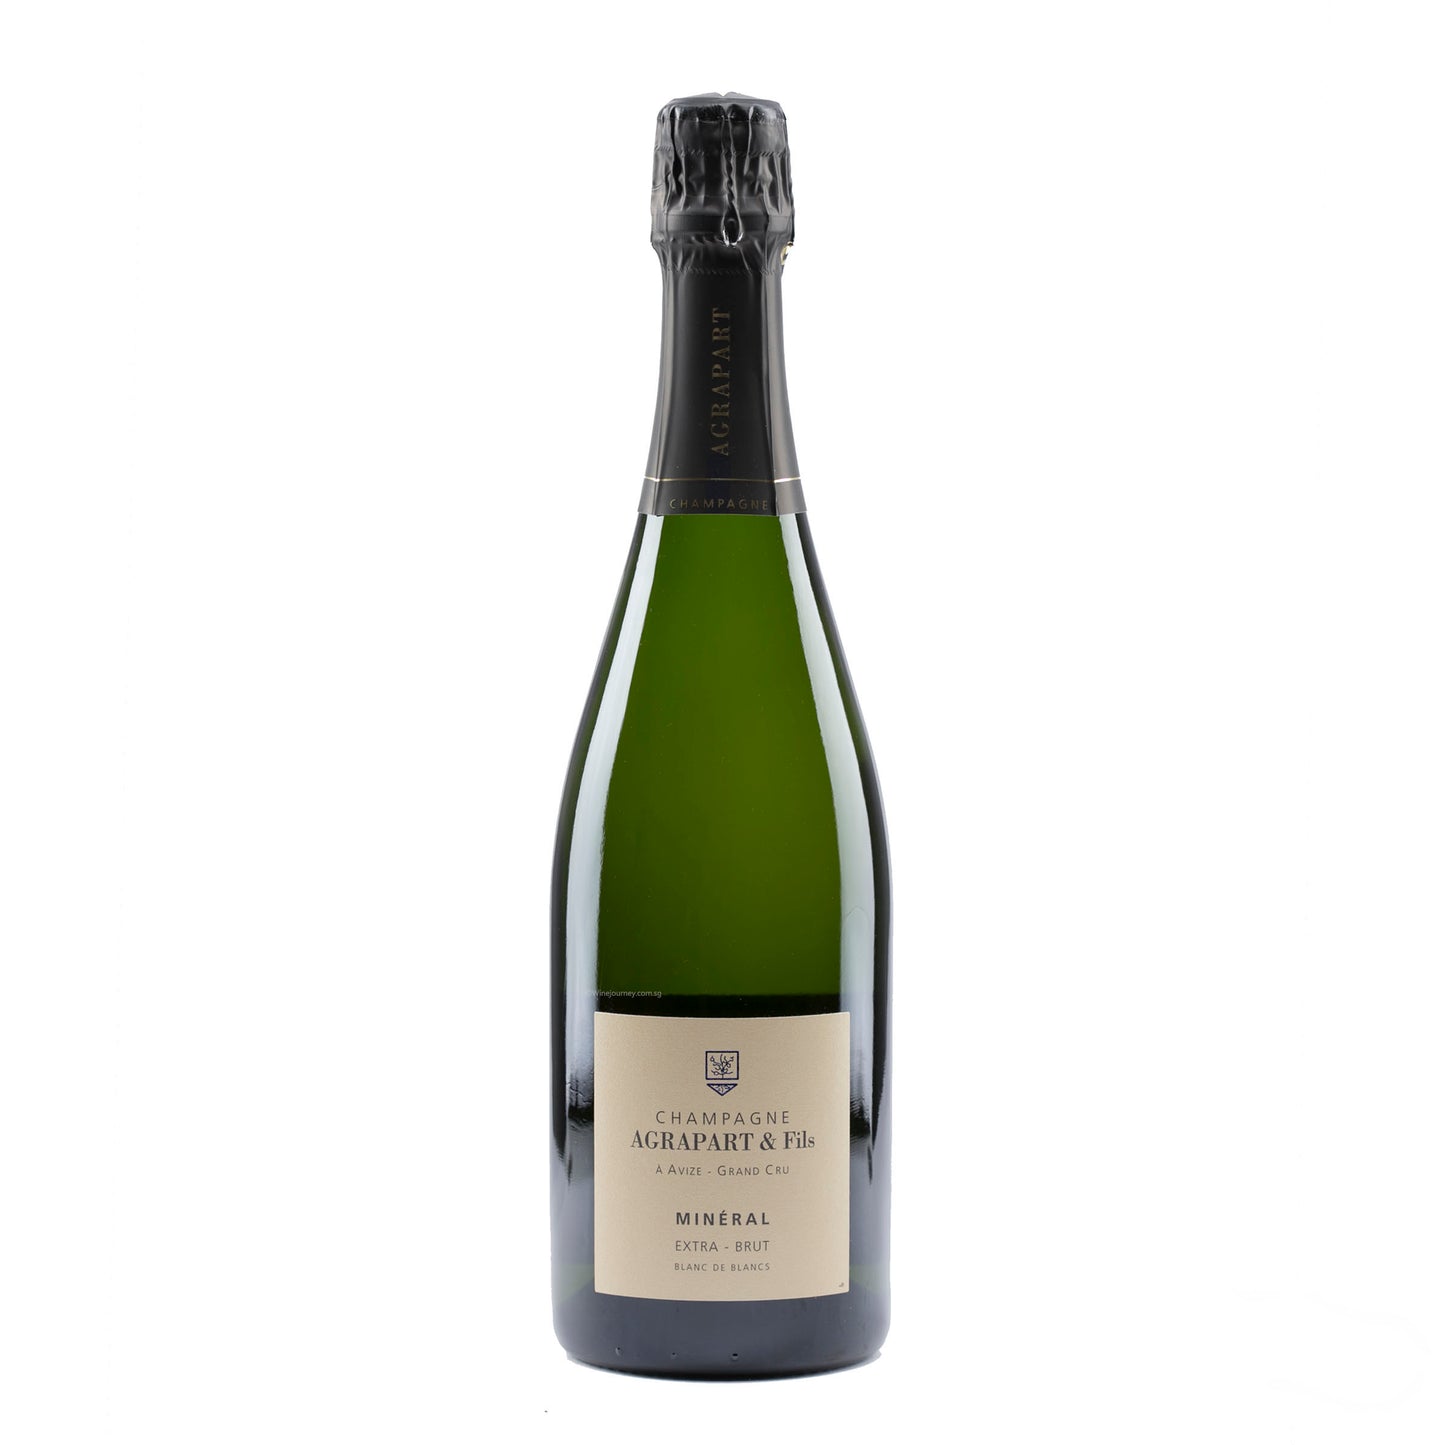 Champagne AGRAPART & FILS MINERAL Blanc de Blancs Grand Cru 2017